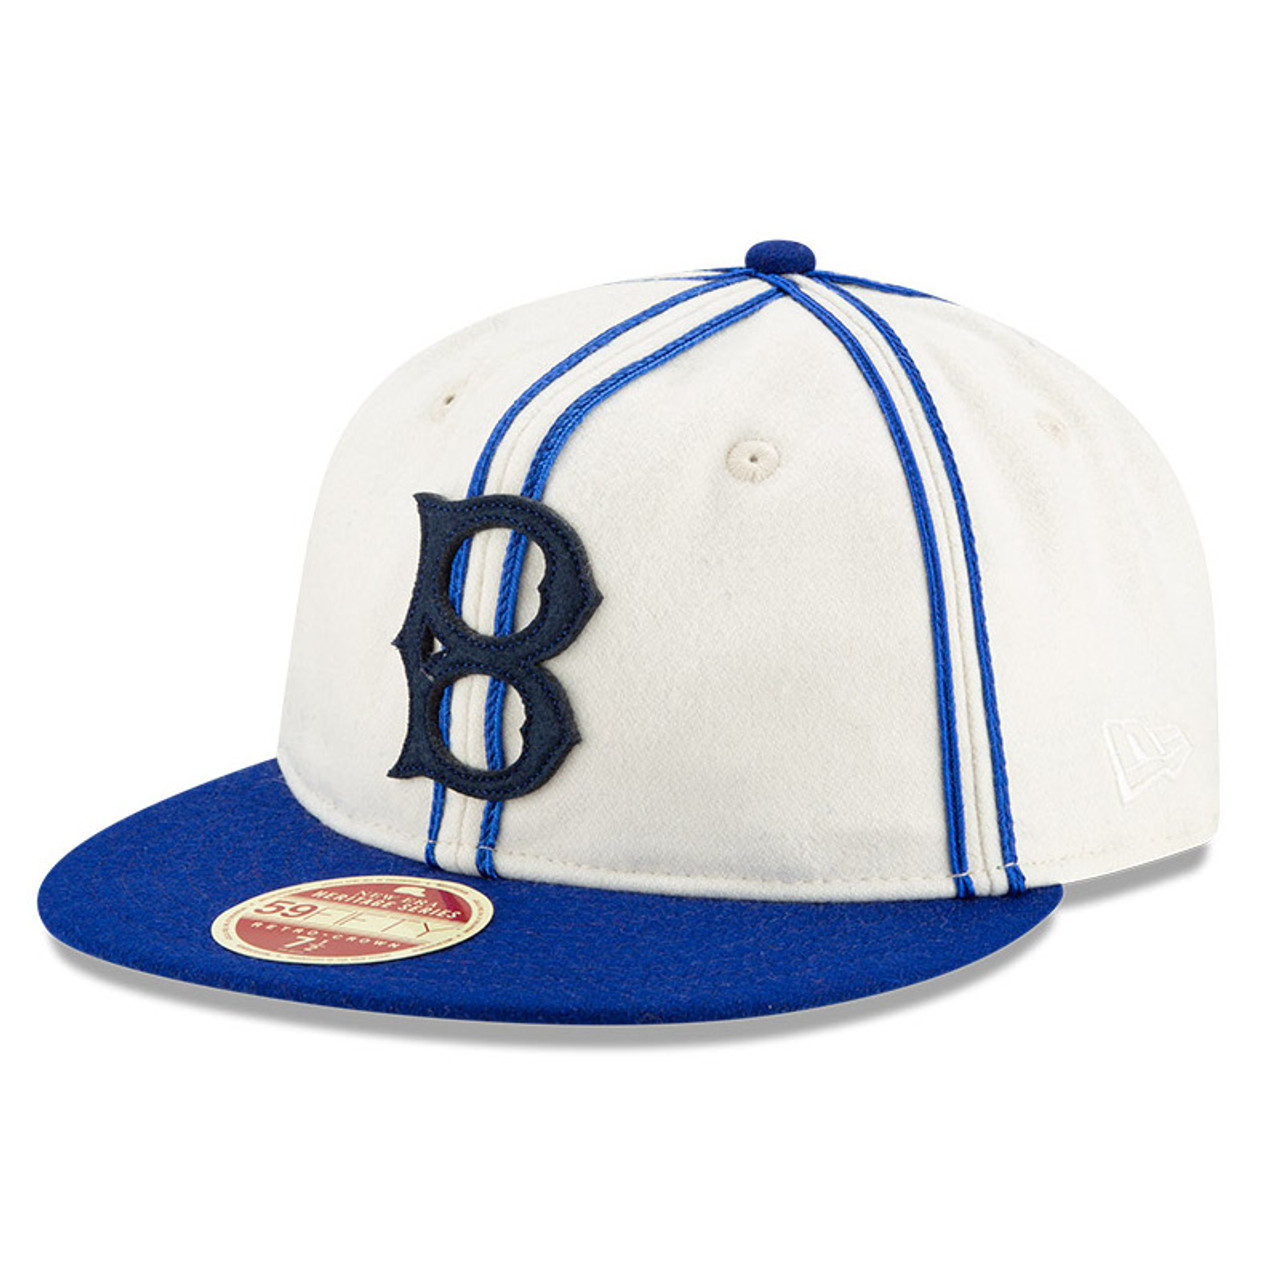 Men’s New Era Heritage Series Authentic 1926 Brooklyn Dodgers Retro-Crown  59FIFTY Cap